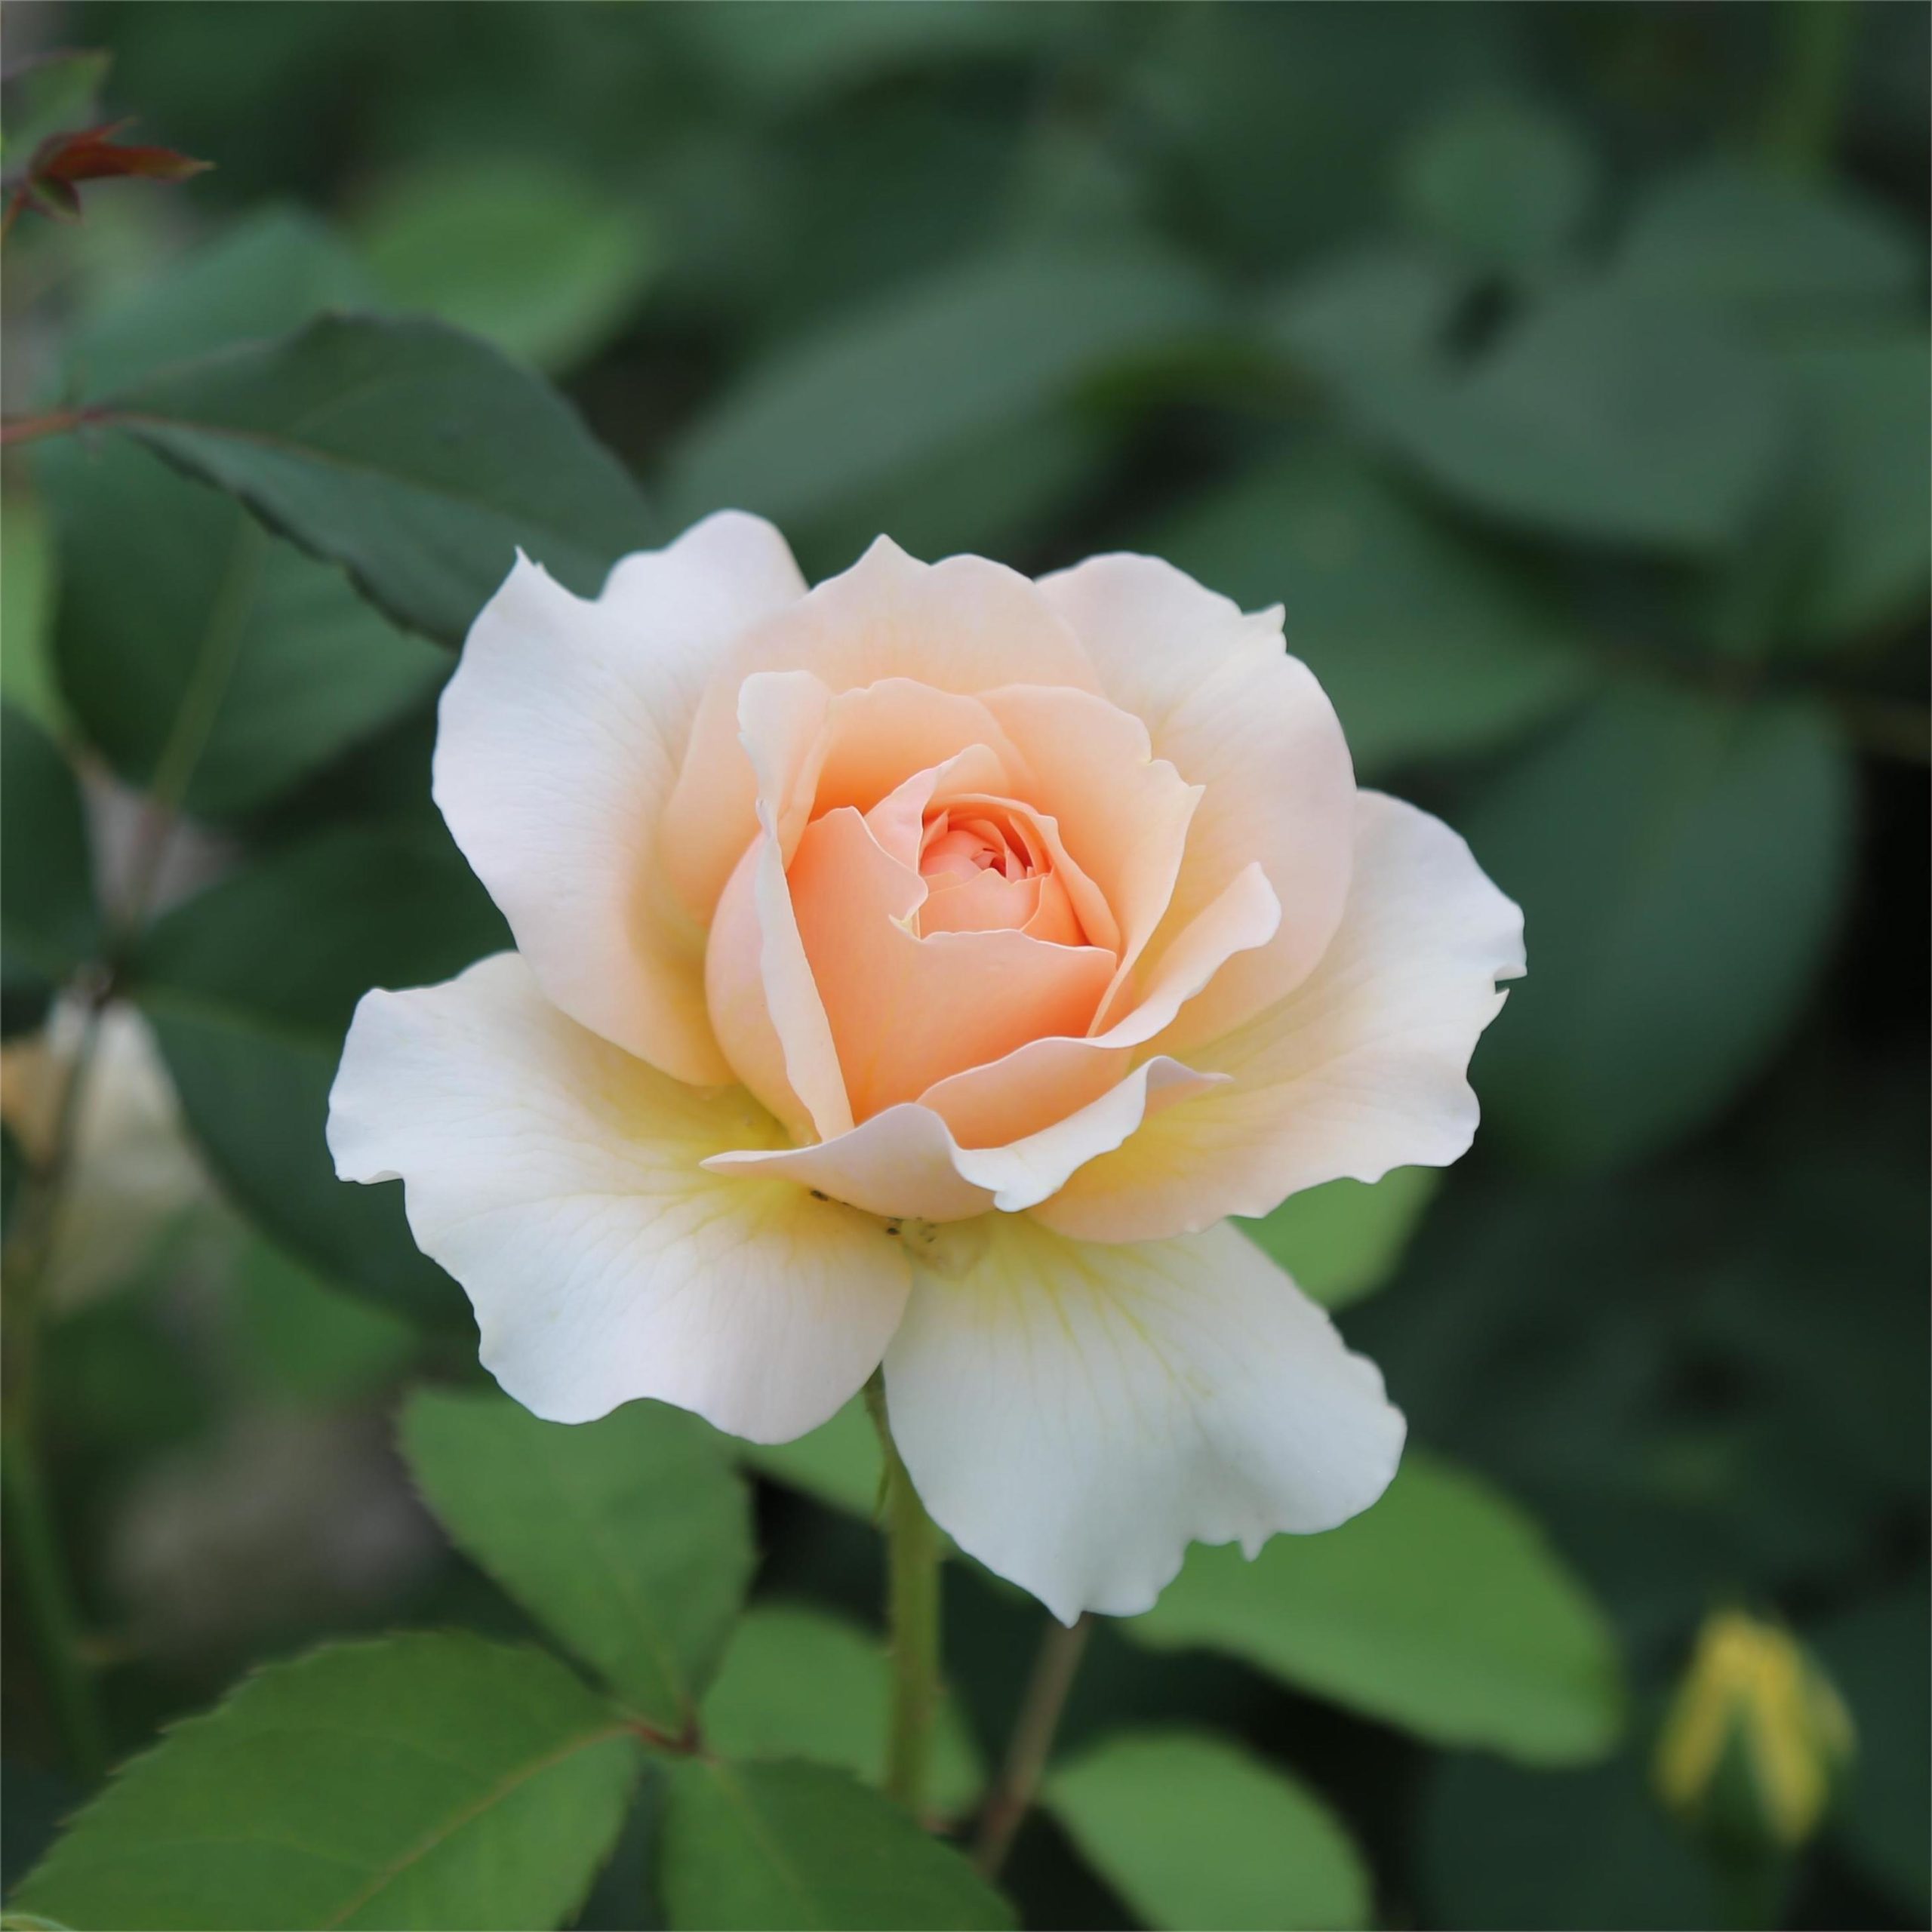 Wholesale Roses In Bulk - Roses For Sale Online - JF Tree